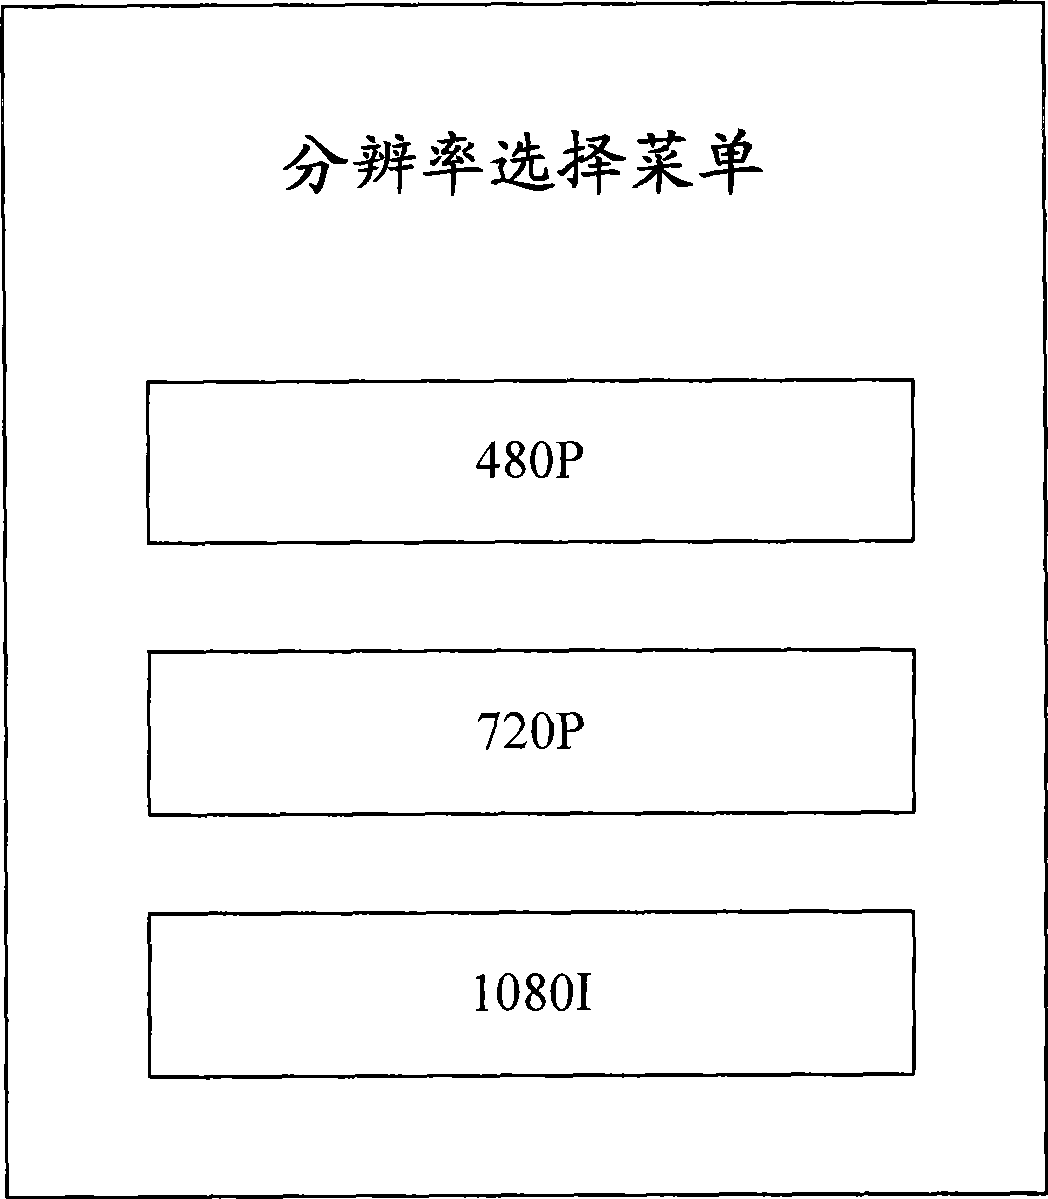 HDMI resolution setting method